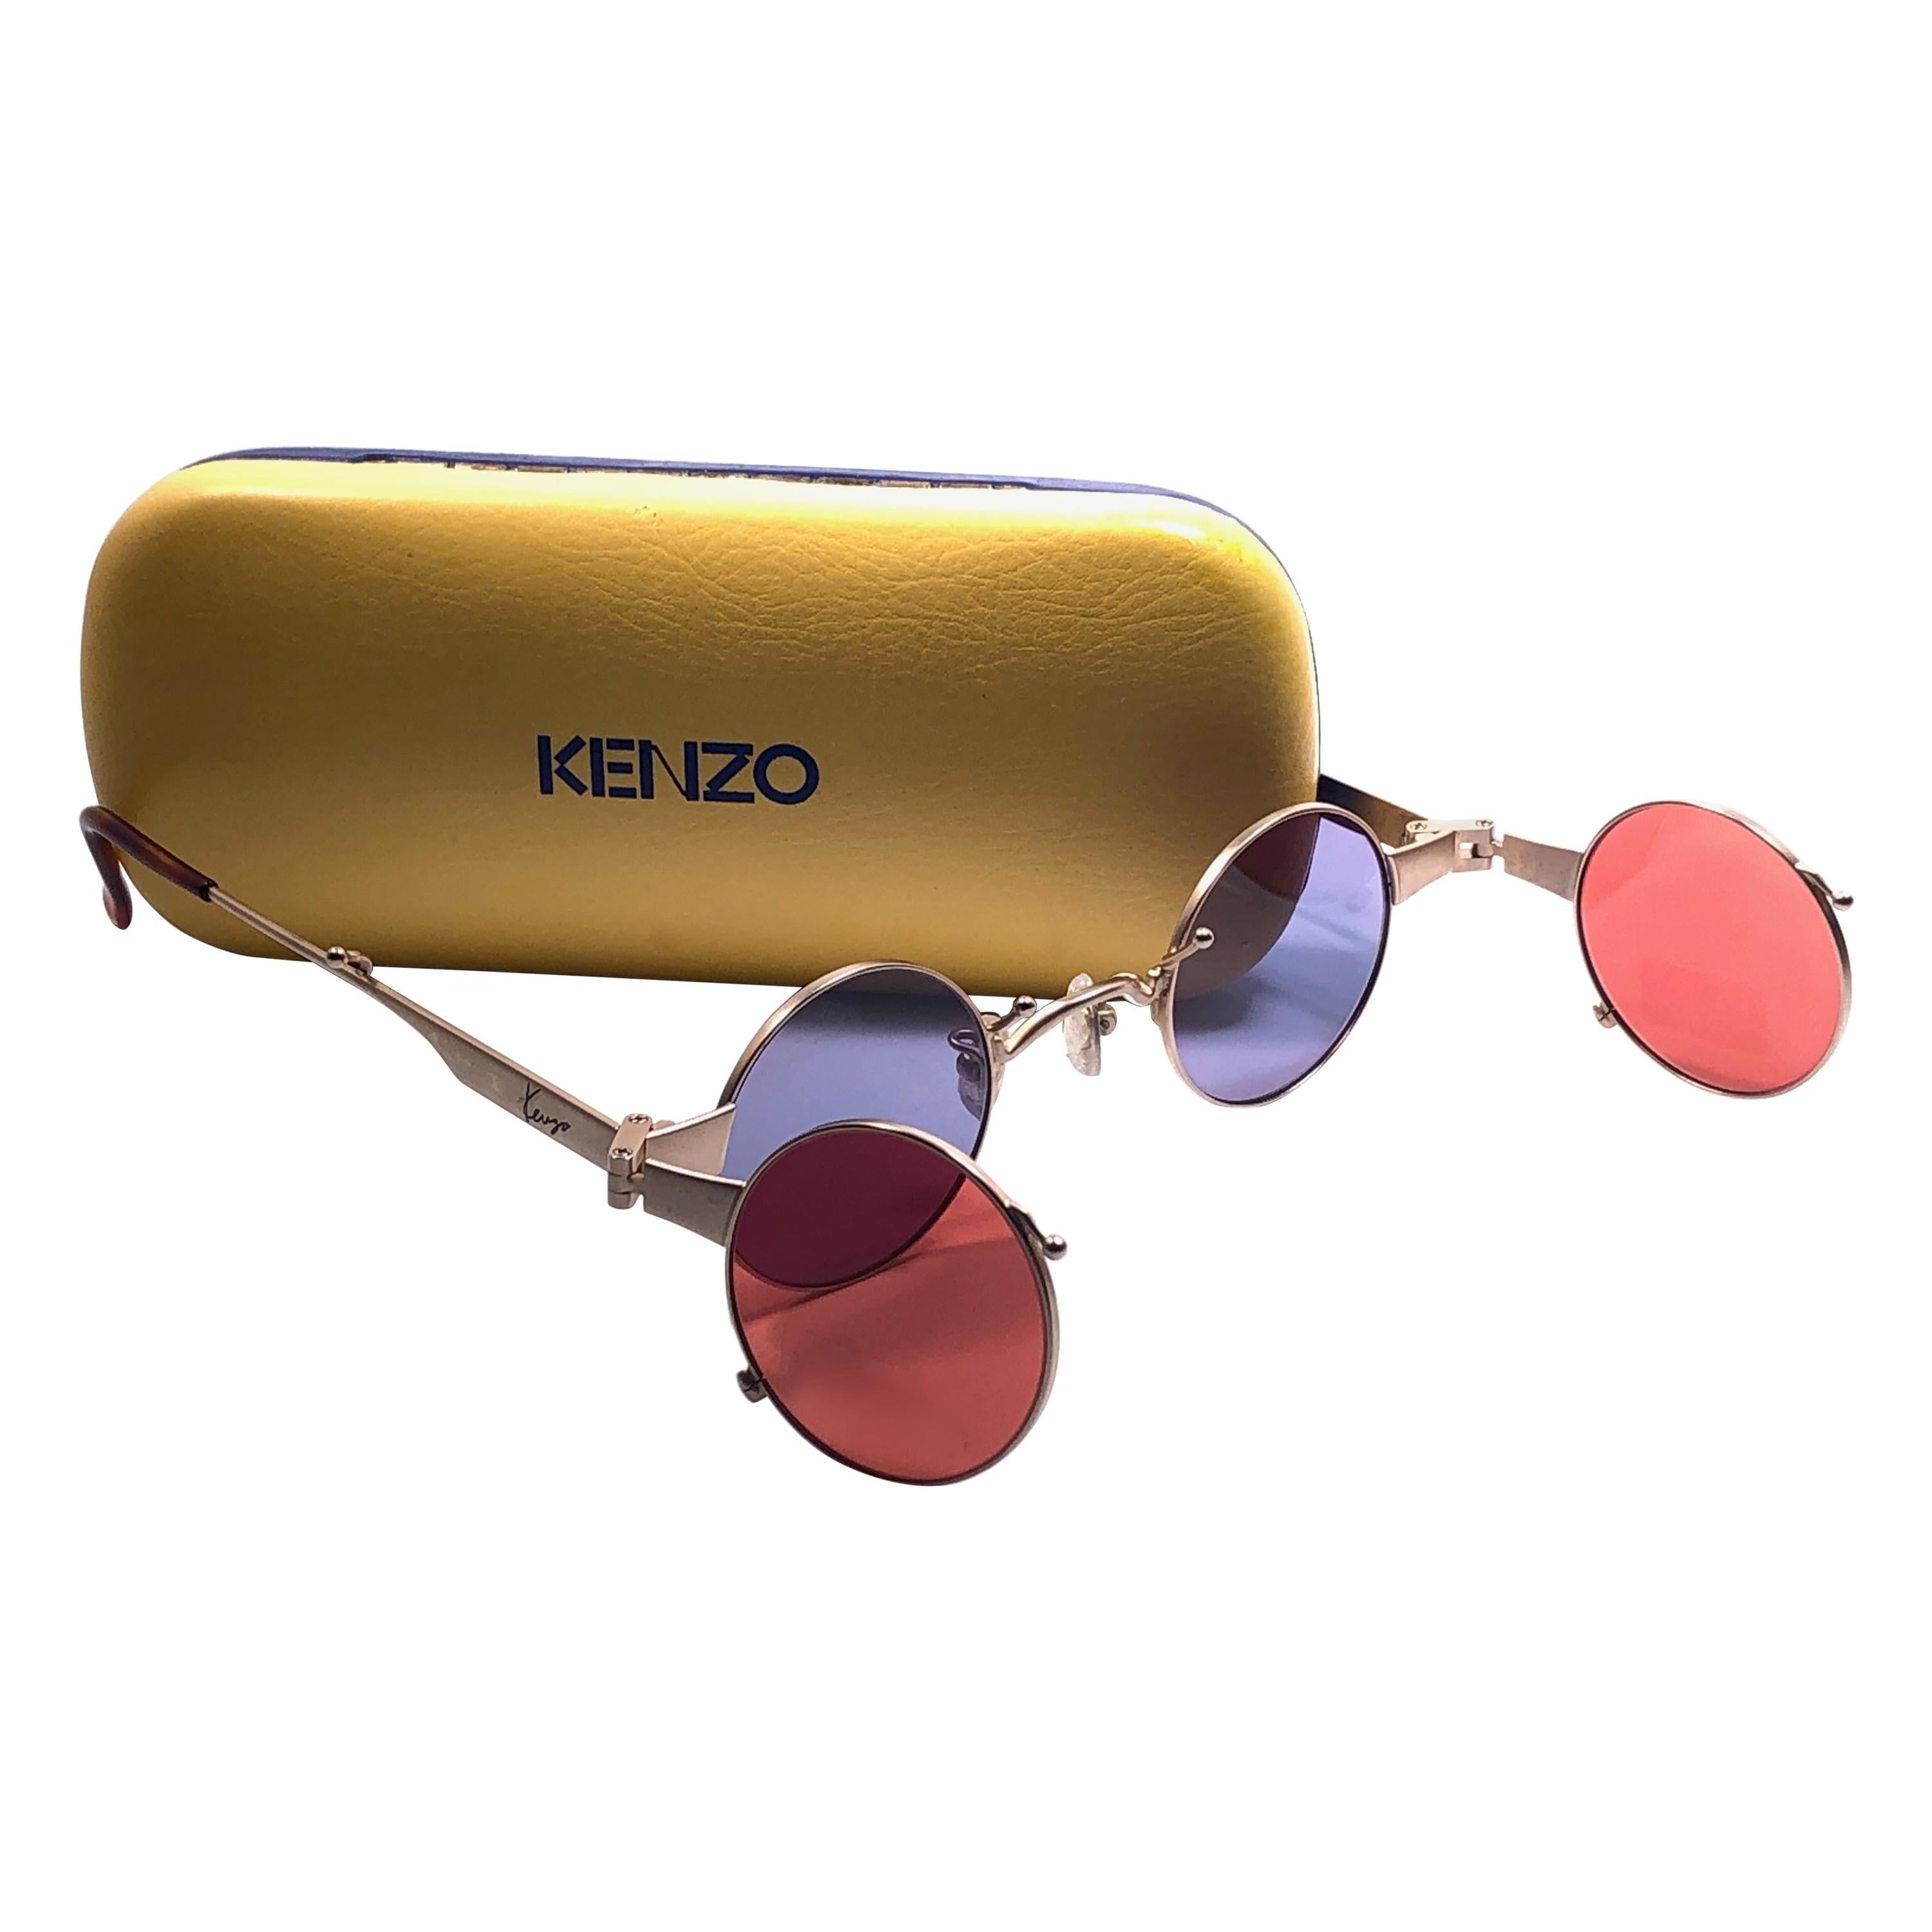 New Rare Vintage Kenzo KE2876 Hinged Gold Sunglasses 1980's Made in Japan